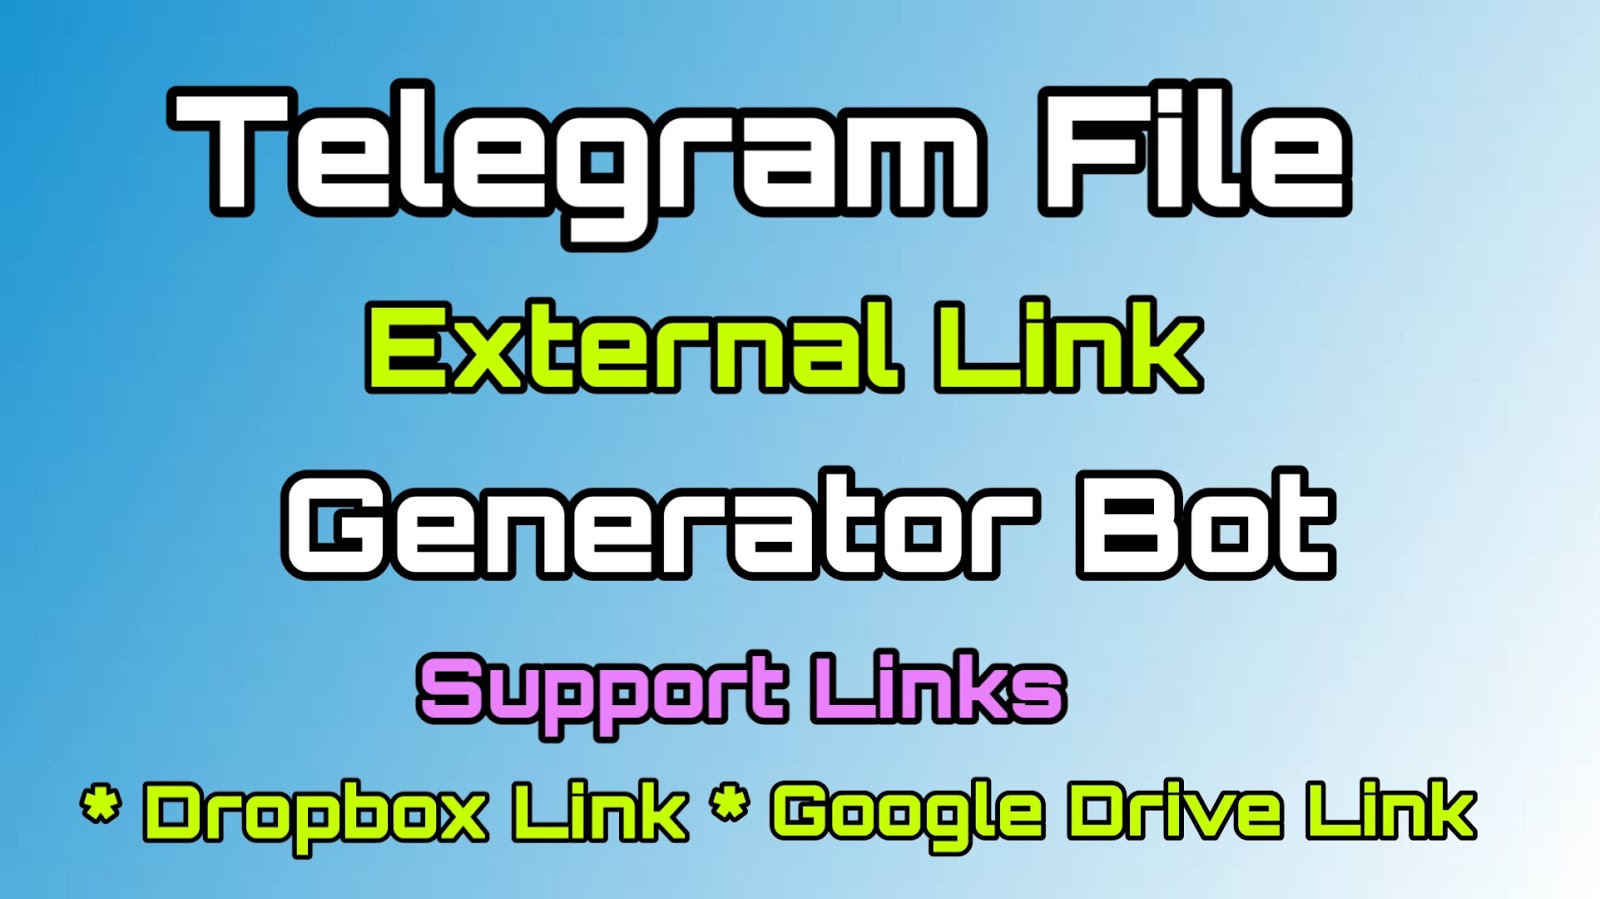 pierna Prohibición espada Create Telegram File External Link Generator Bot | Google Drive Link |  Dropbox Link